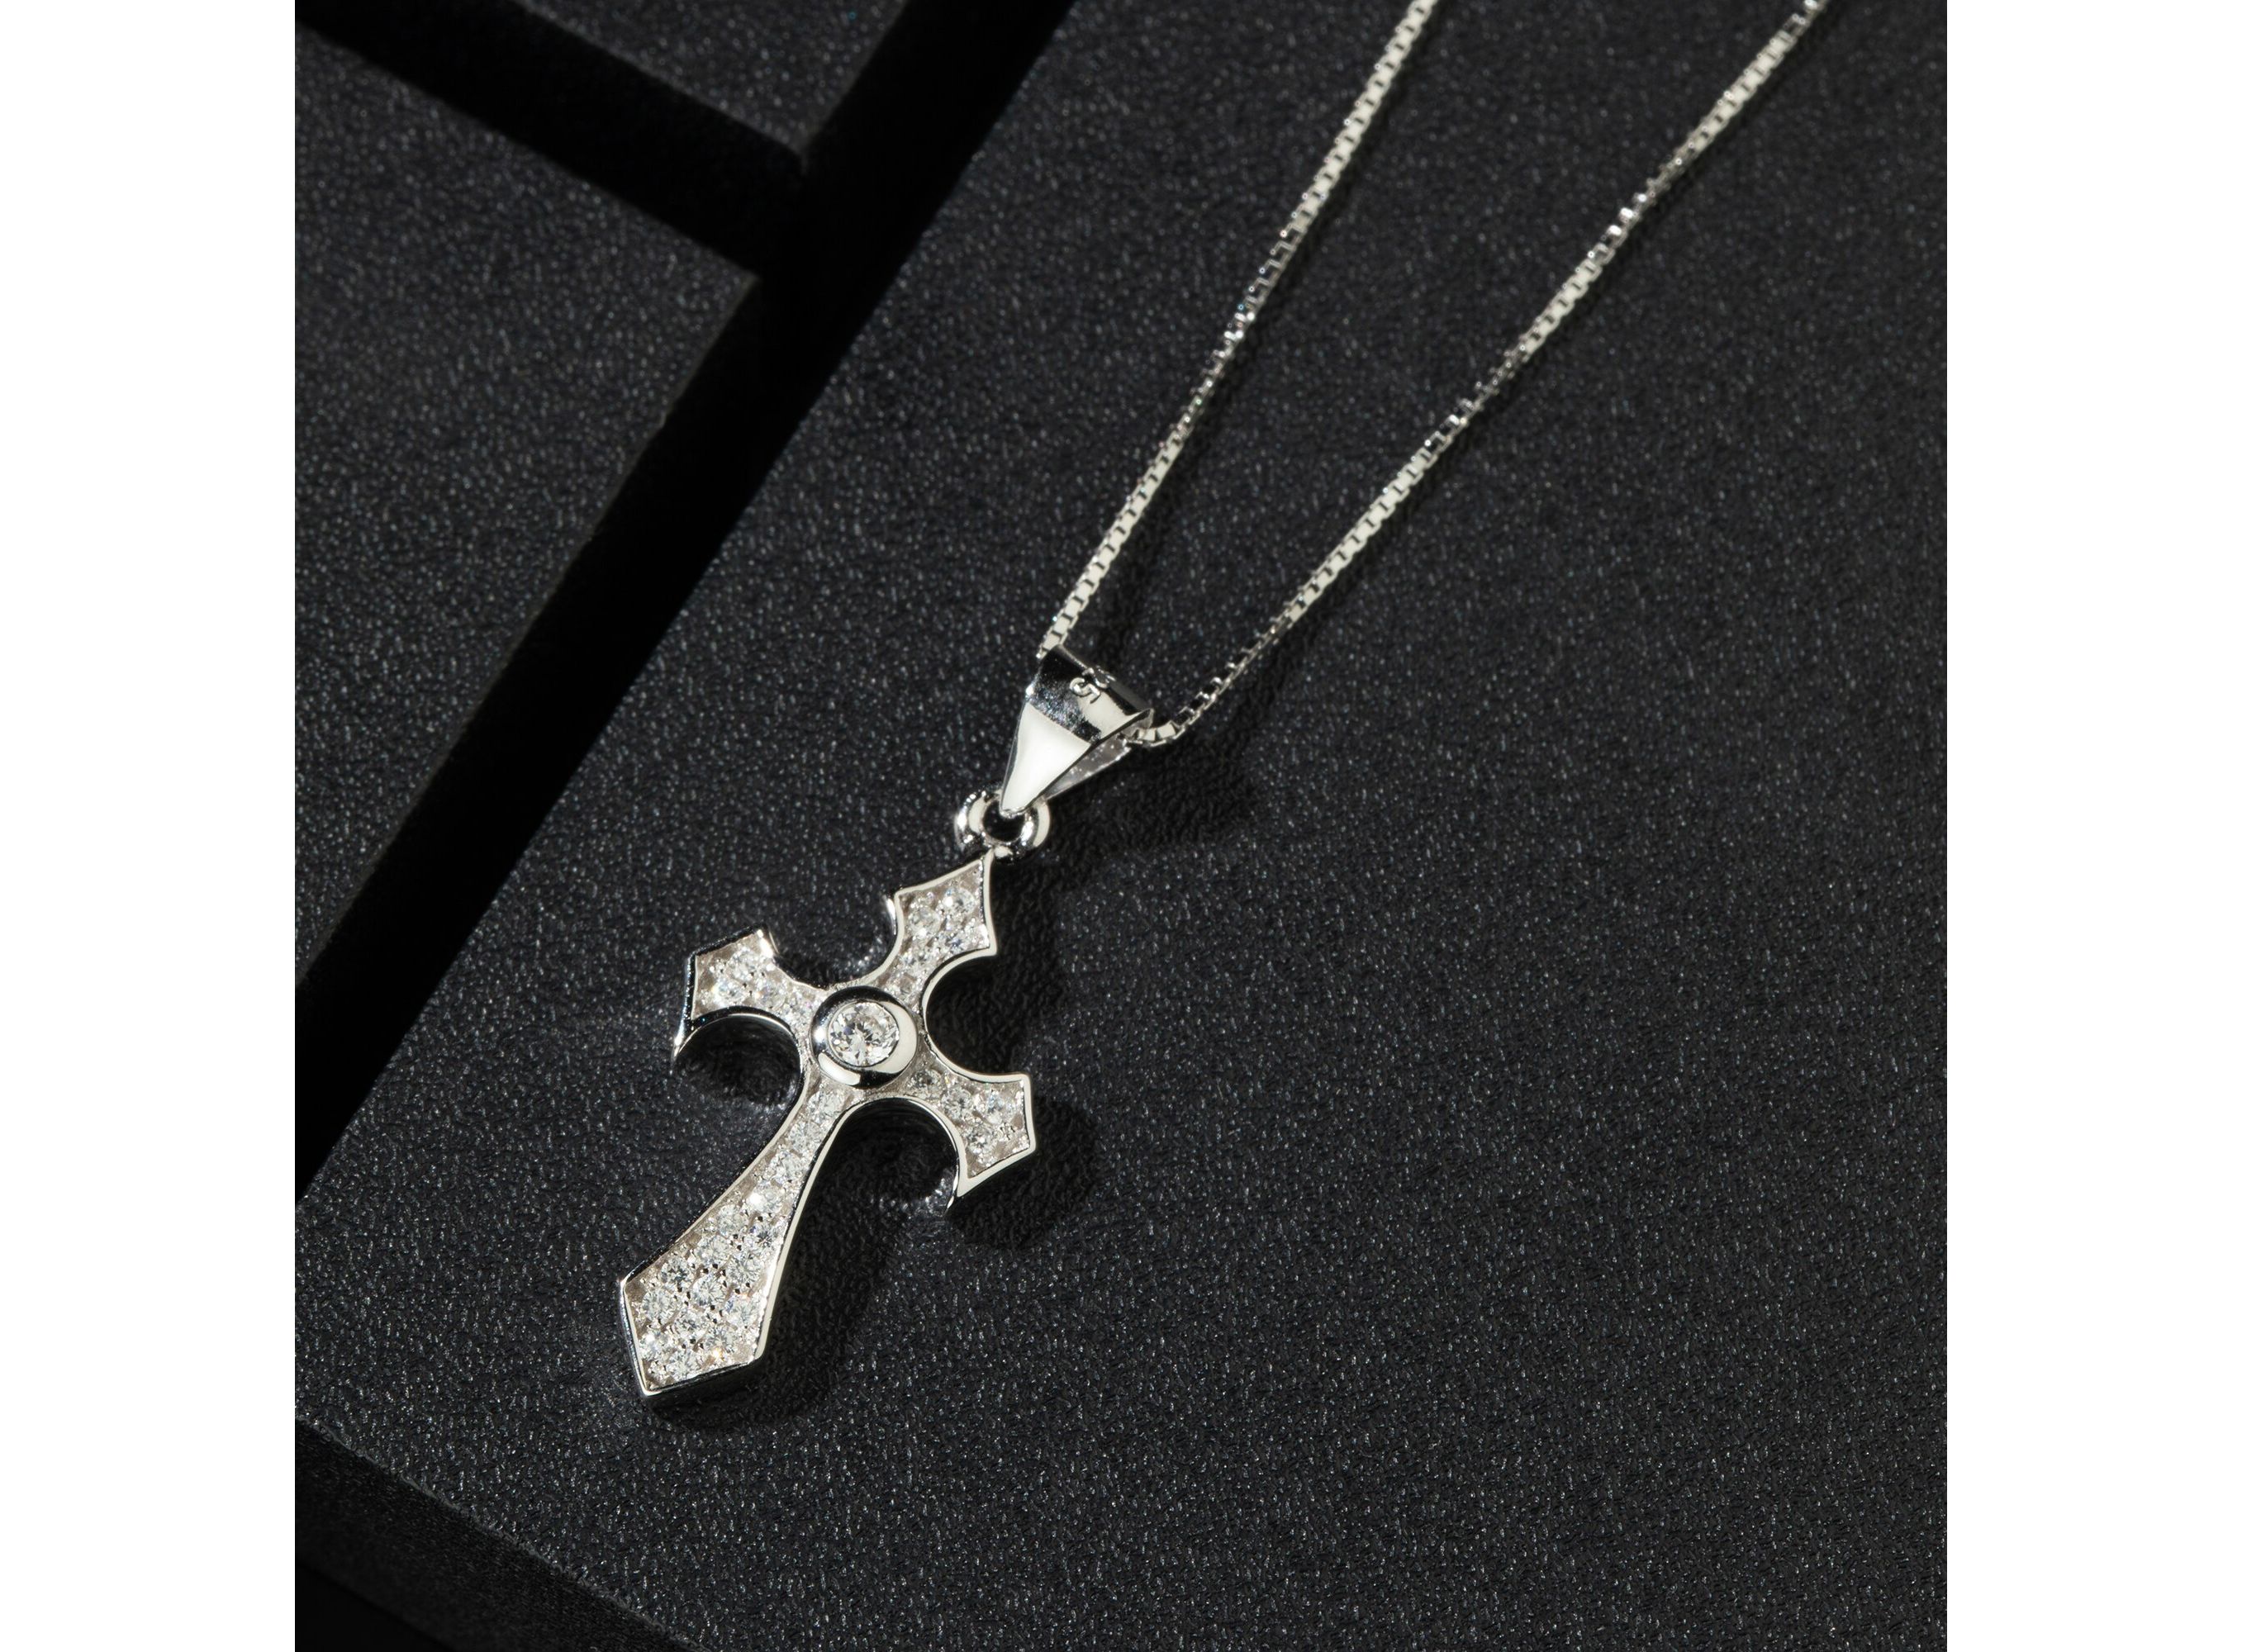 Silver crystal Cross Pendants Necklaces for women 2021 fine